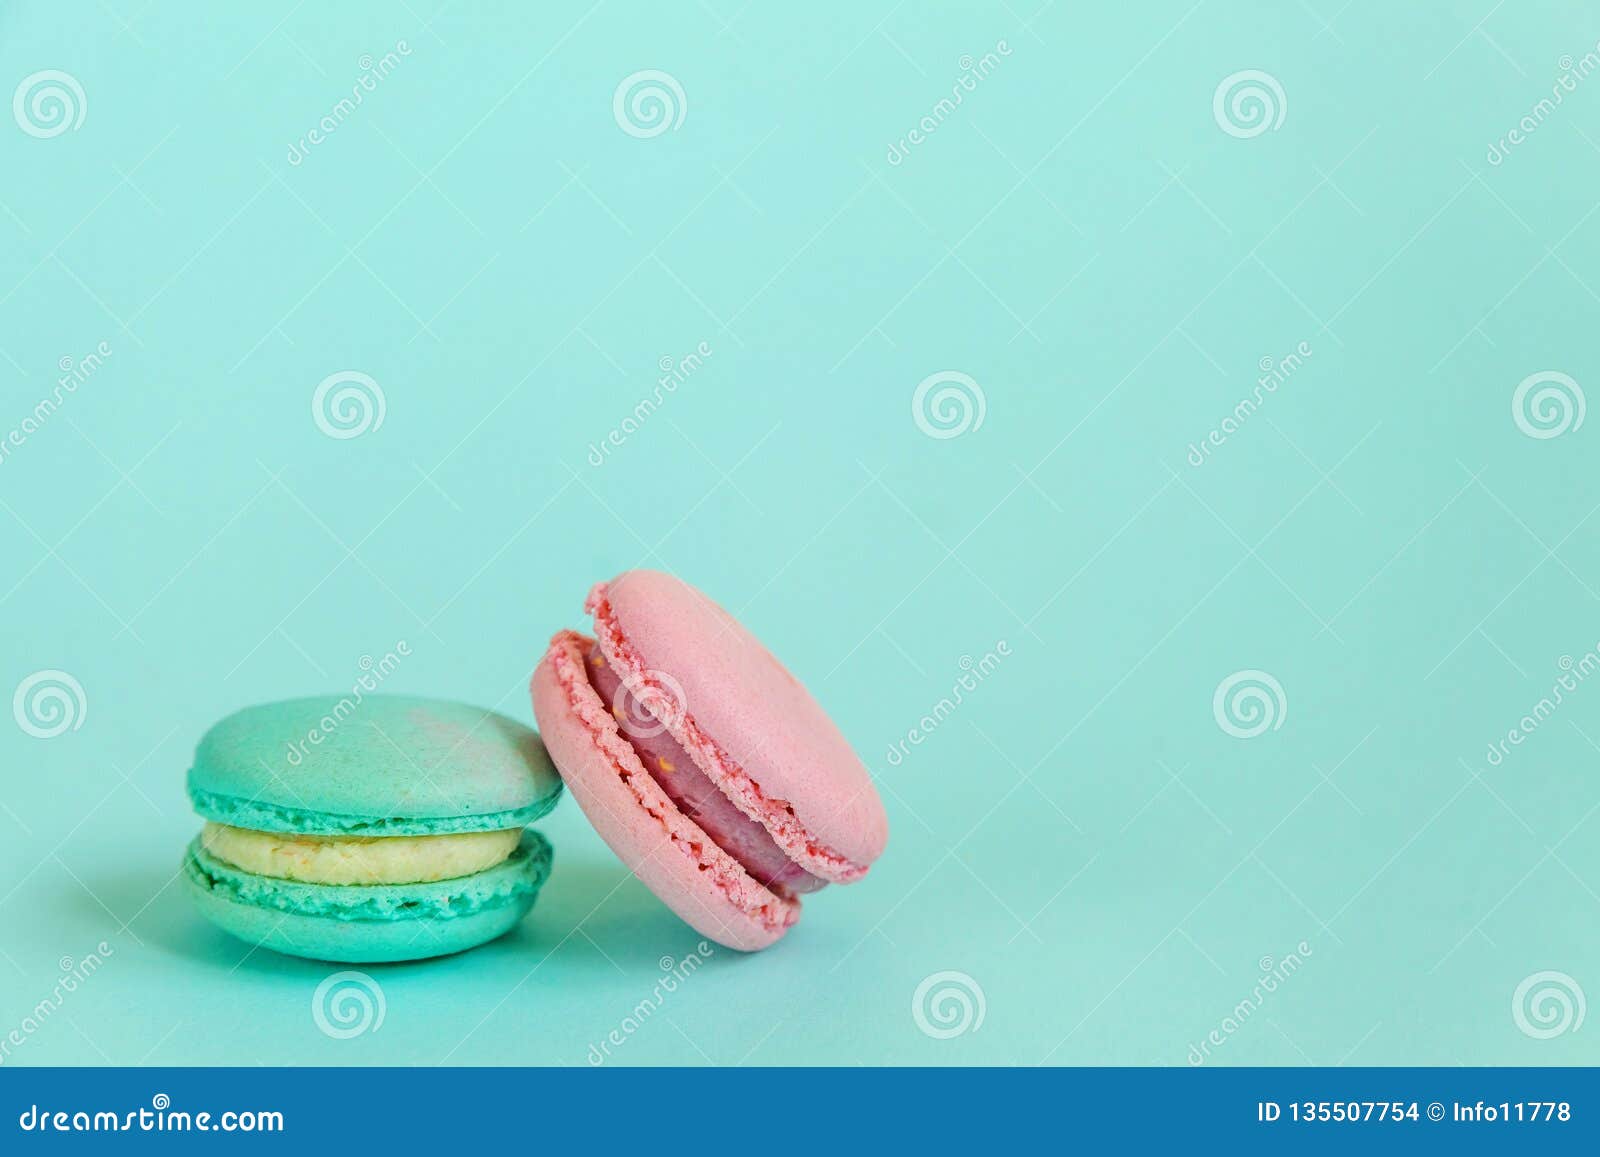 Colorful Macaron on Blue Background Stock Photo - Image of cuisine ...